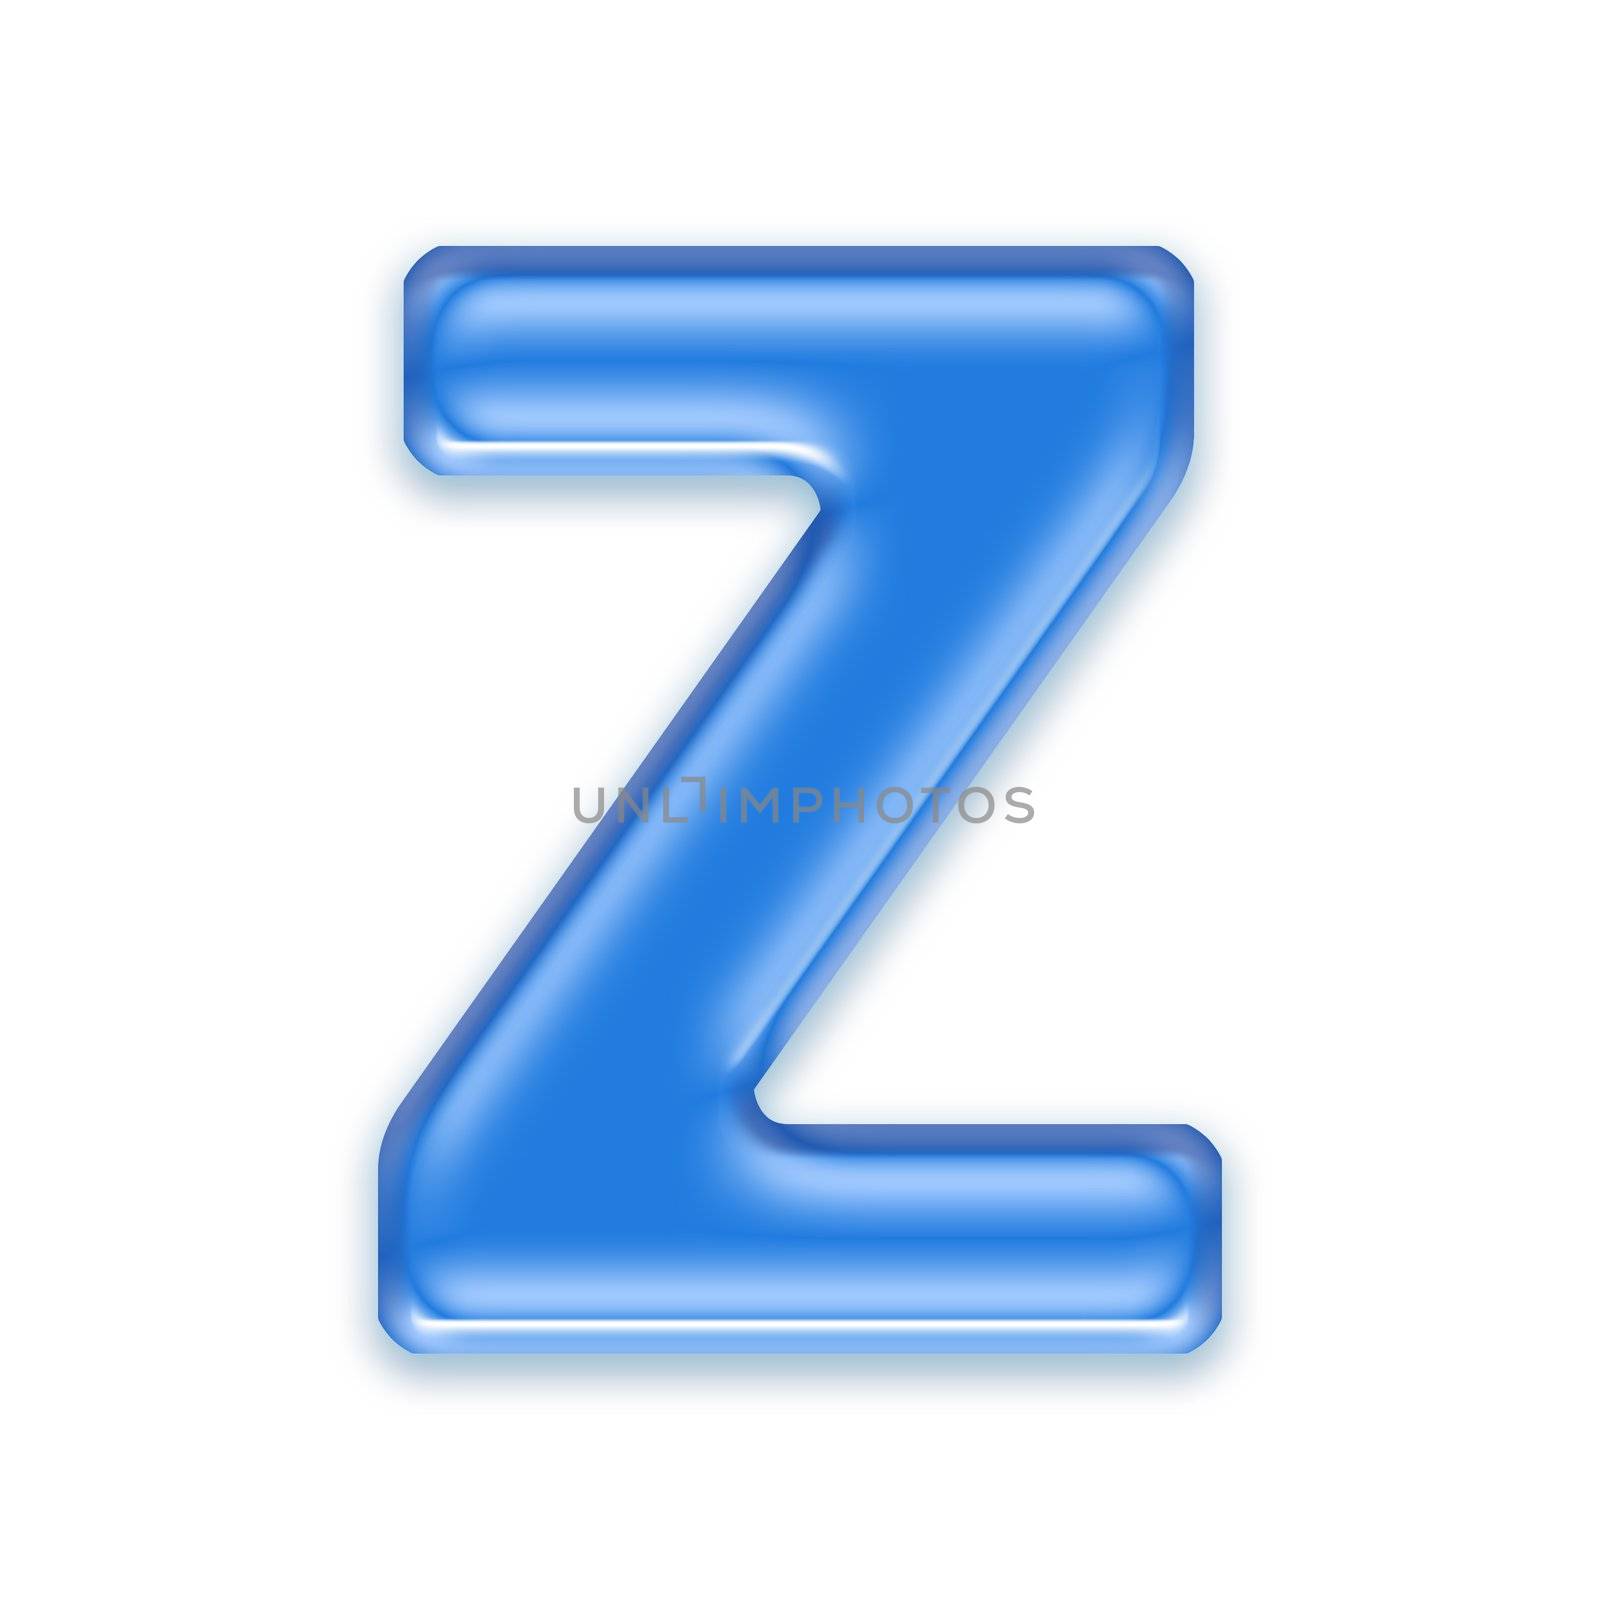 Aqua letter isolated on white background  - Z